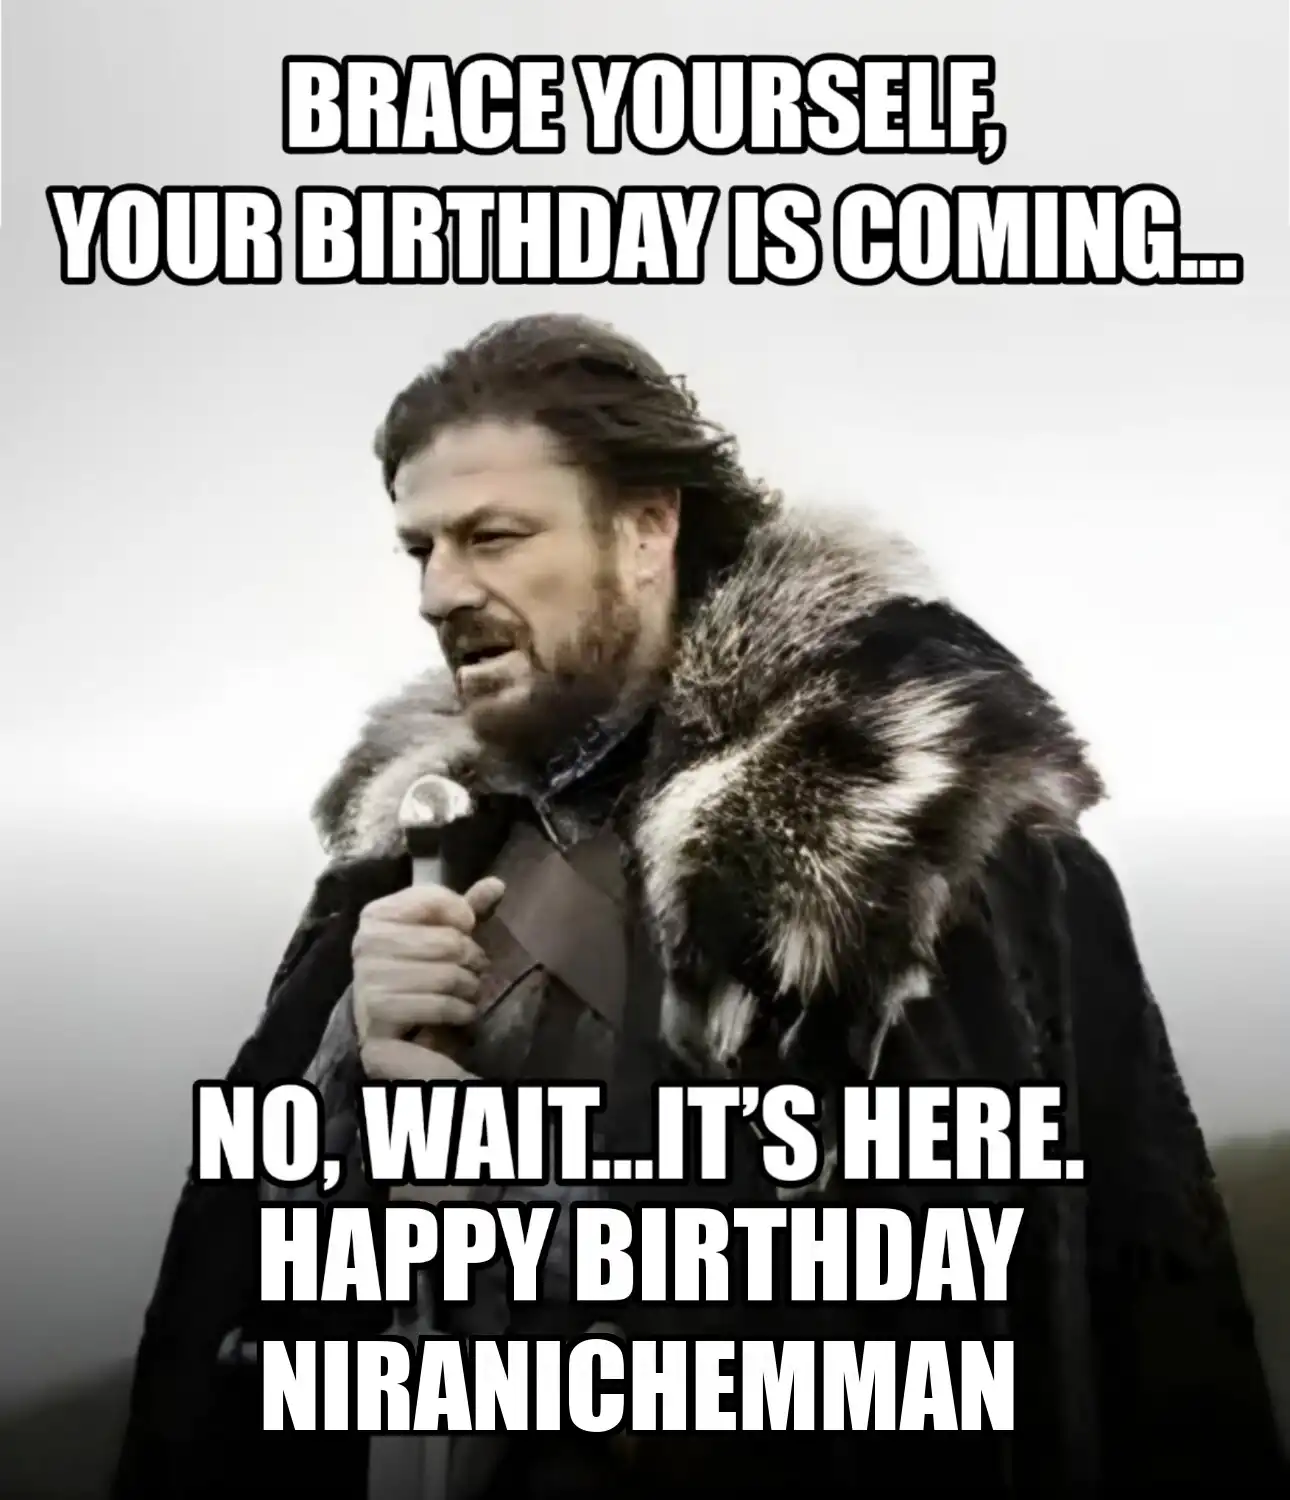 Happy Birthday Niranichemman Brace Yourself Your Birthday Is Coming Meme